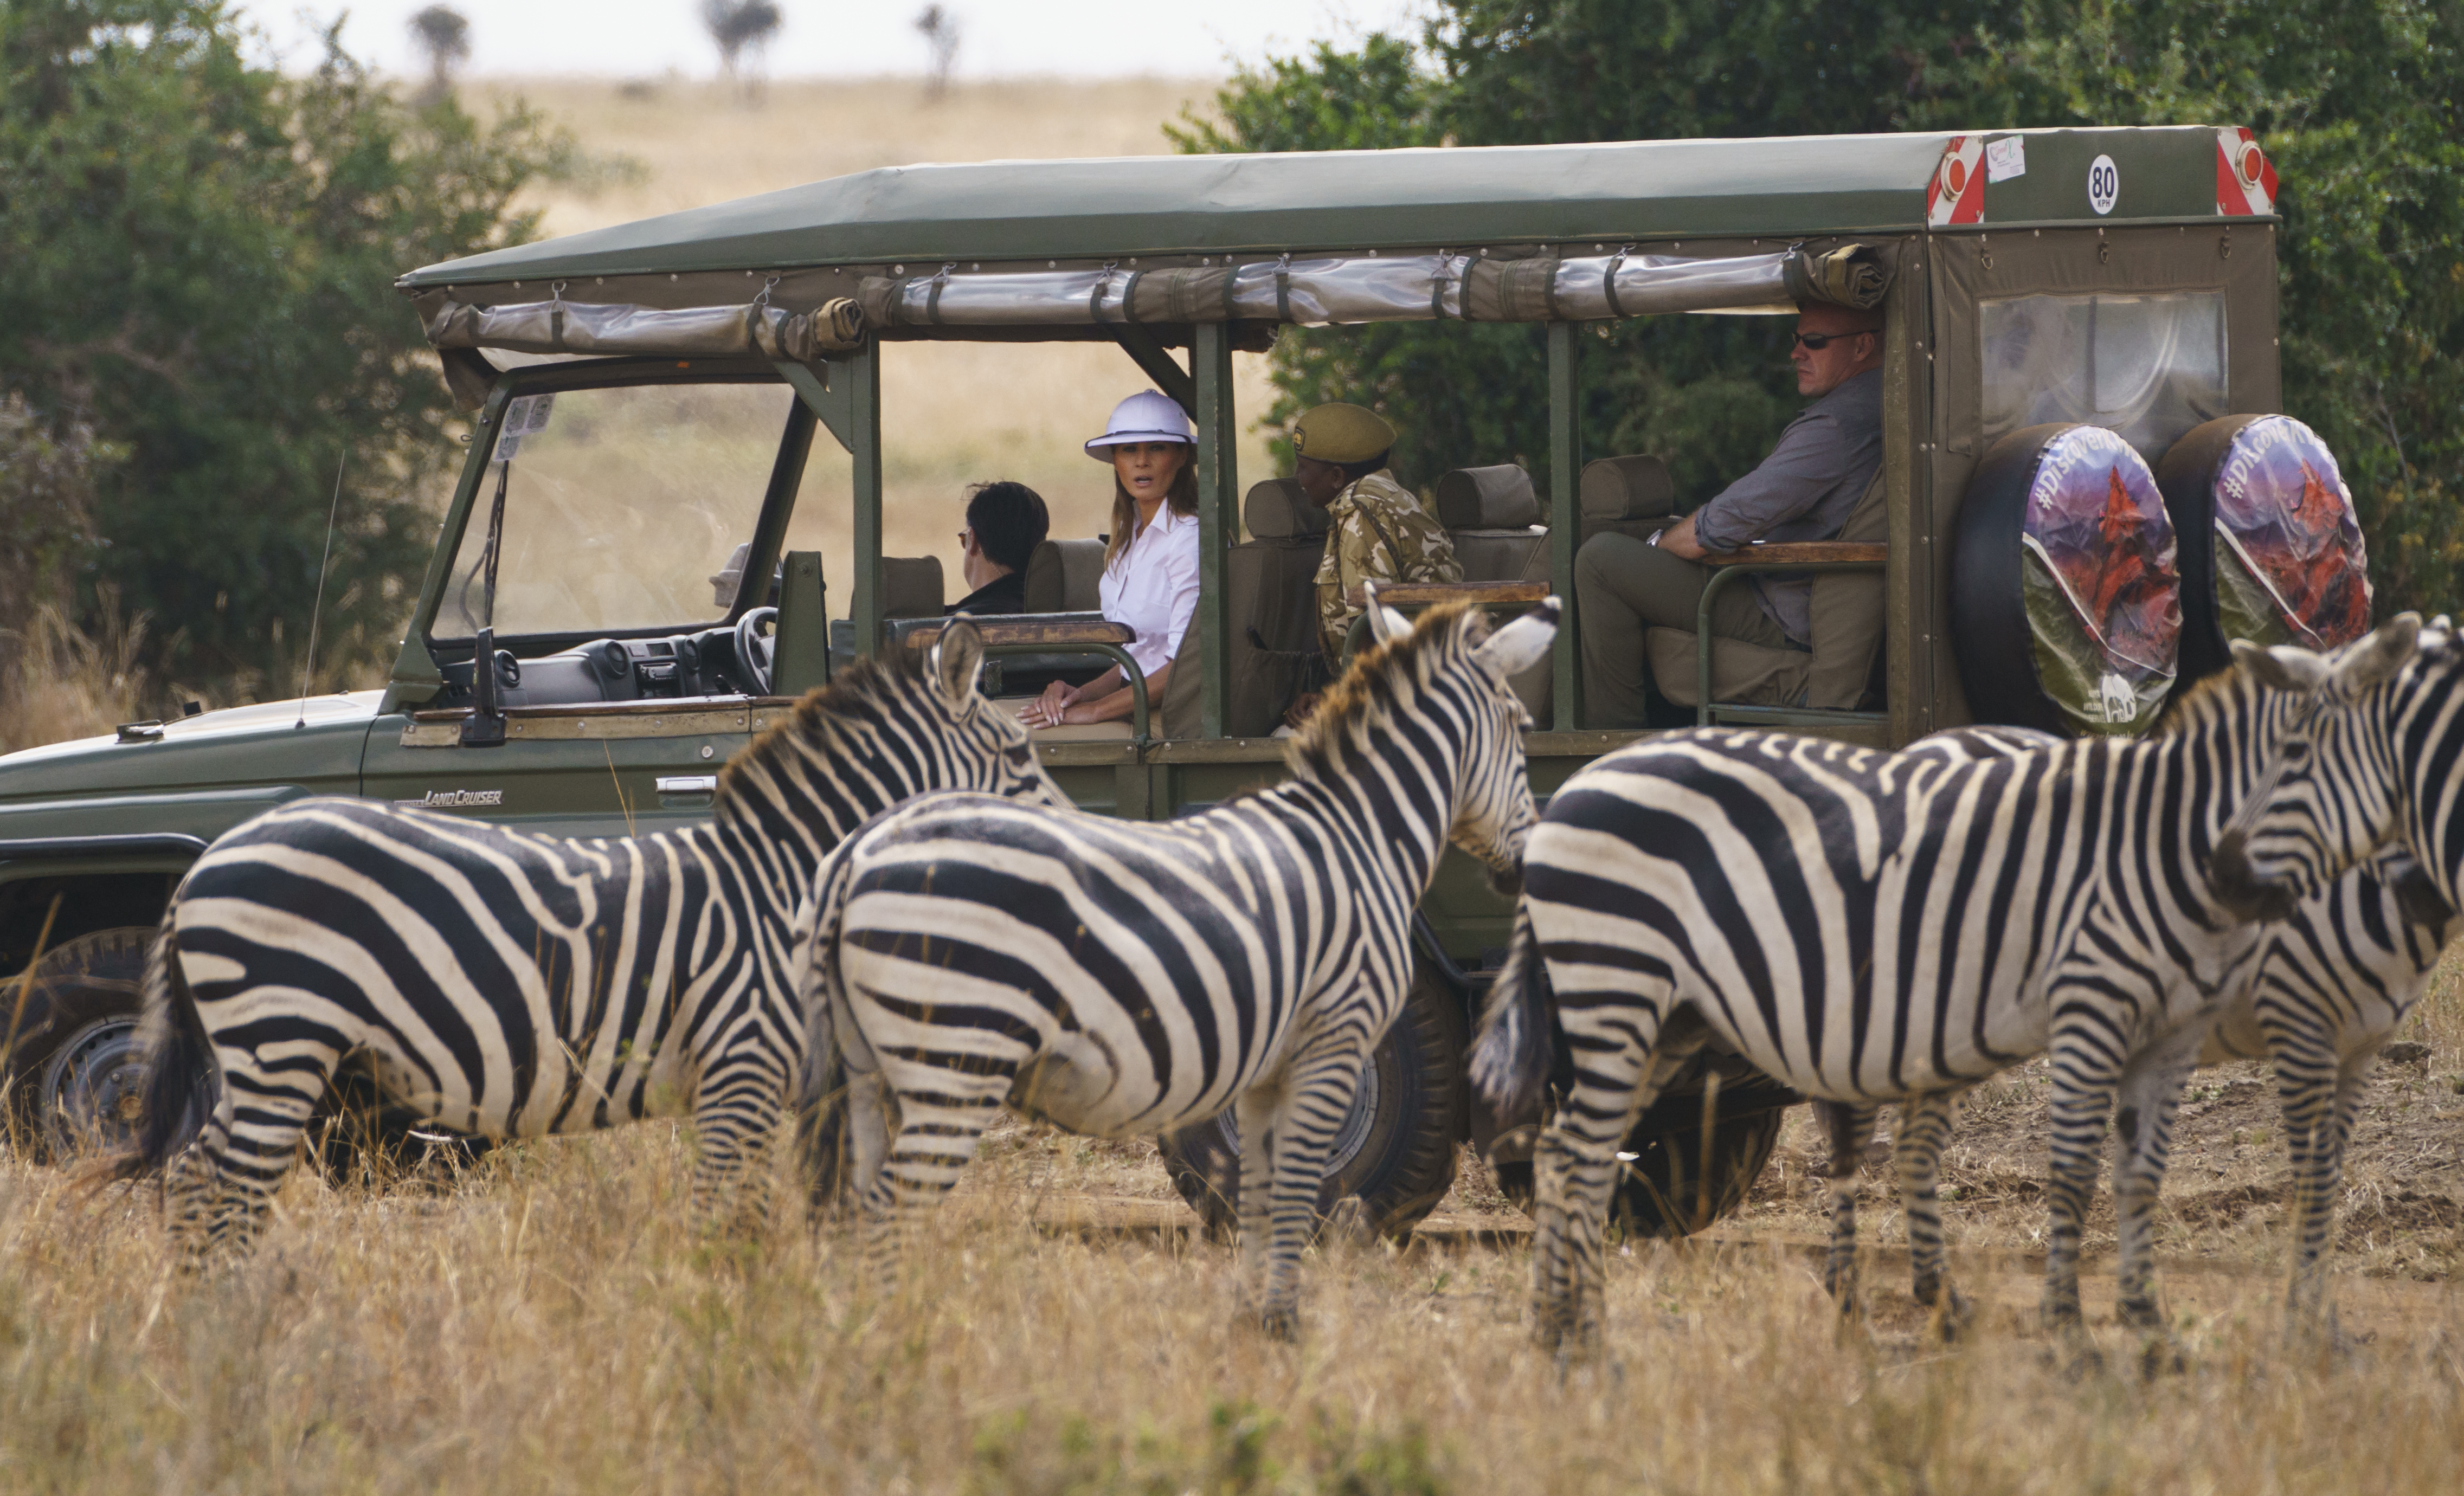 Melania Trump observes zebras during a safari in Kenya